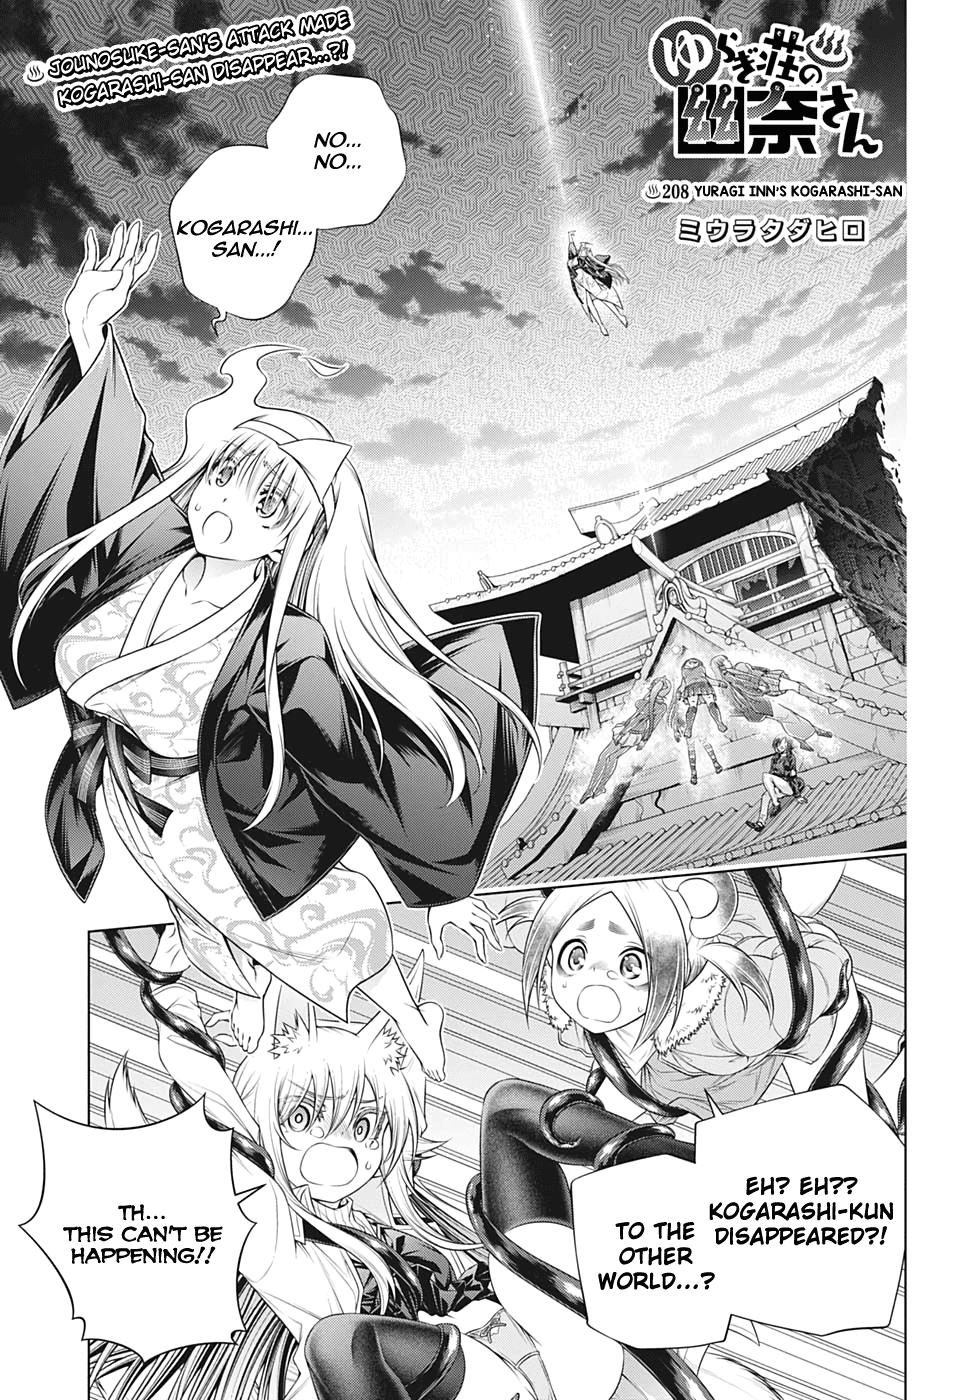 Read Yuragi-Sou No Yuuna-San Vol.24 Chapter 206: Genryuusai-San Repeats on  Mangakakalot